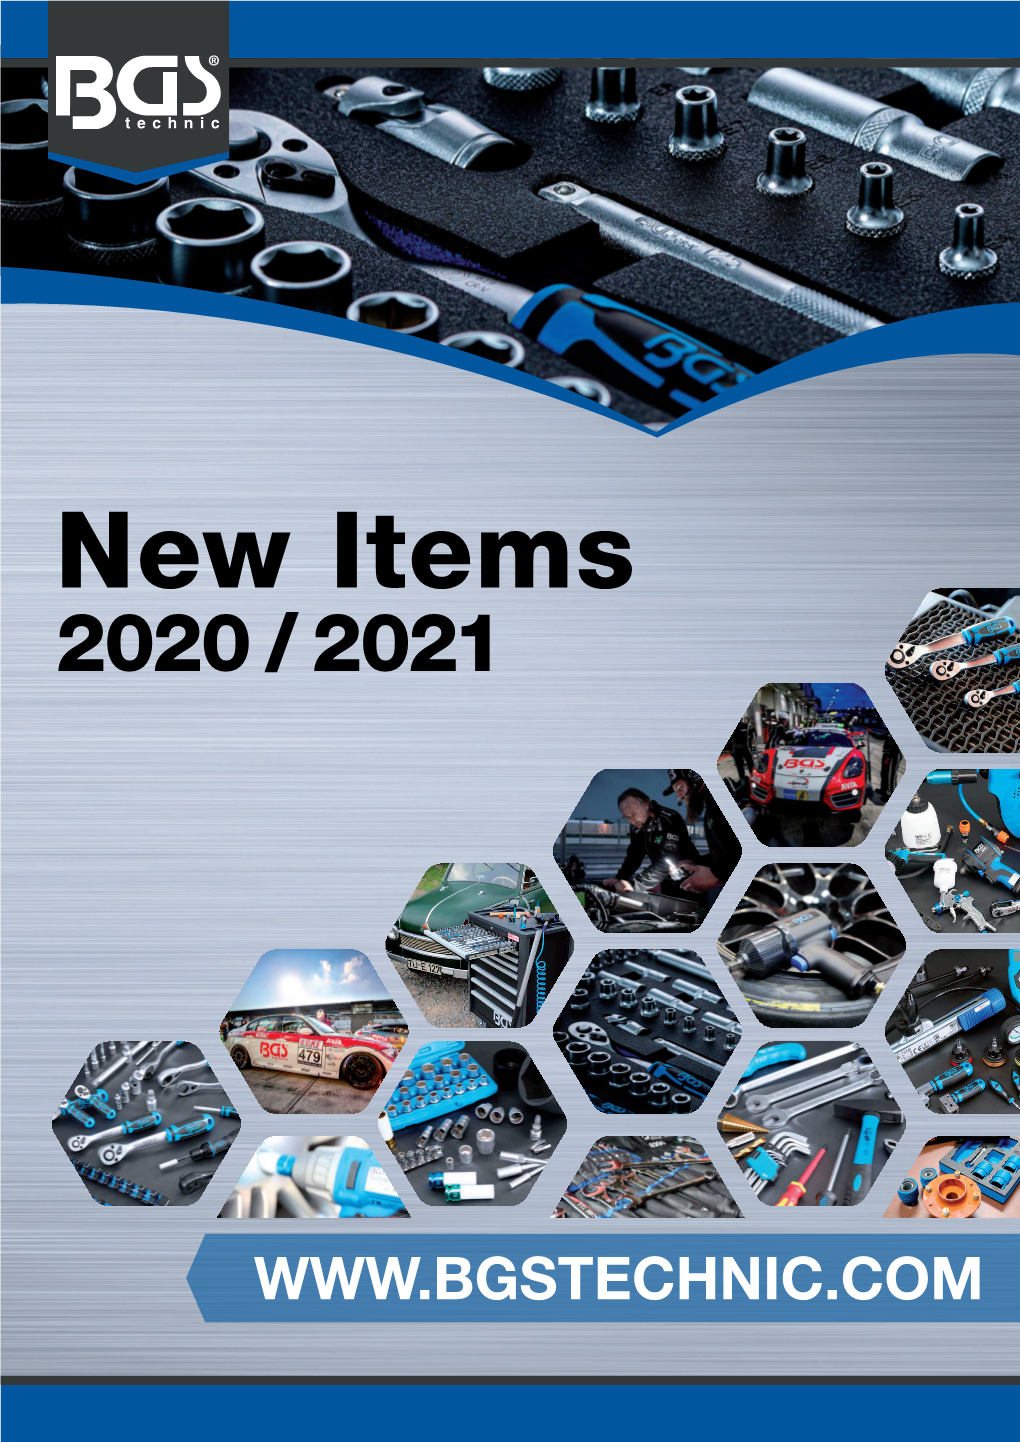 BGS Technic Catalog New Items